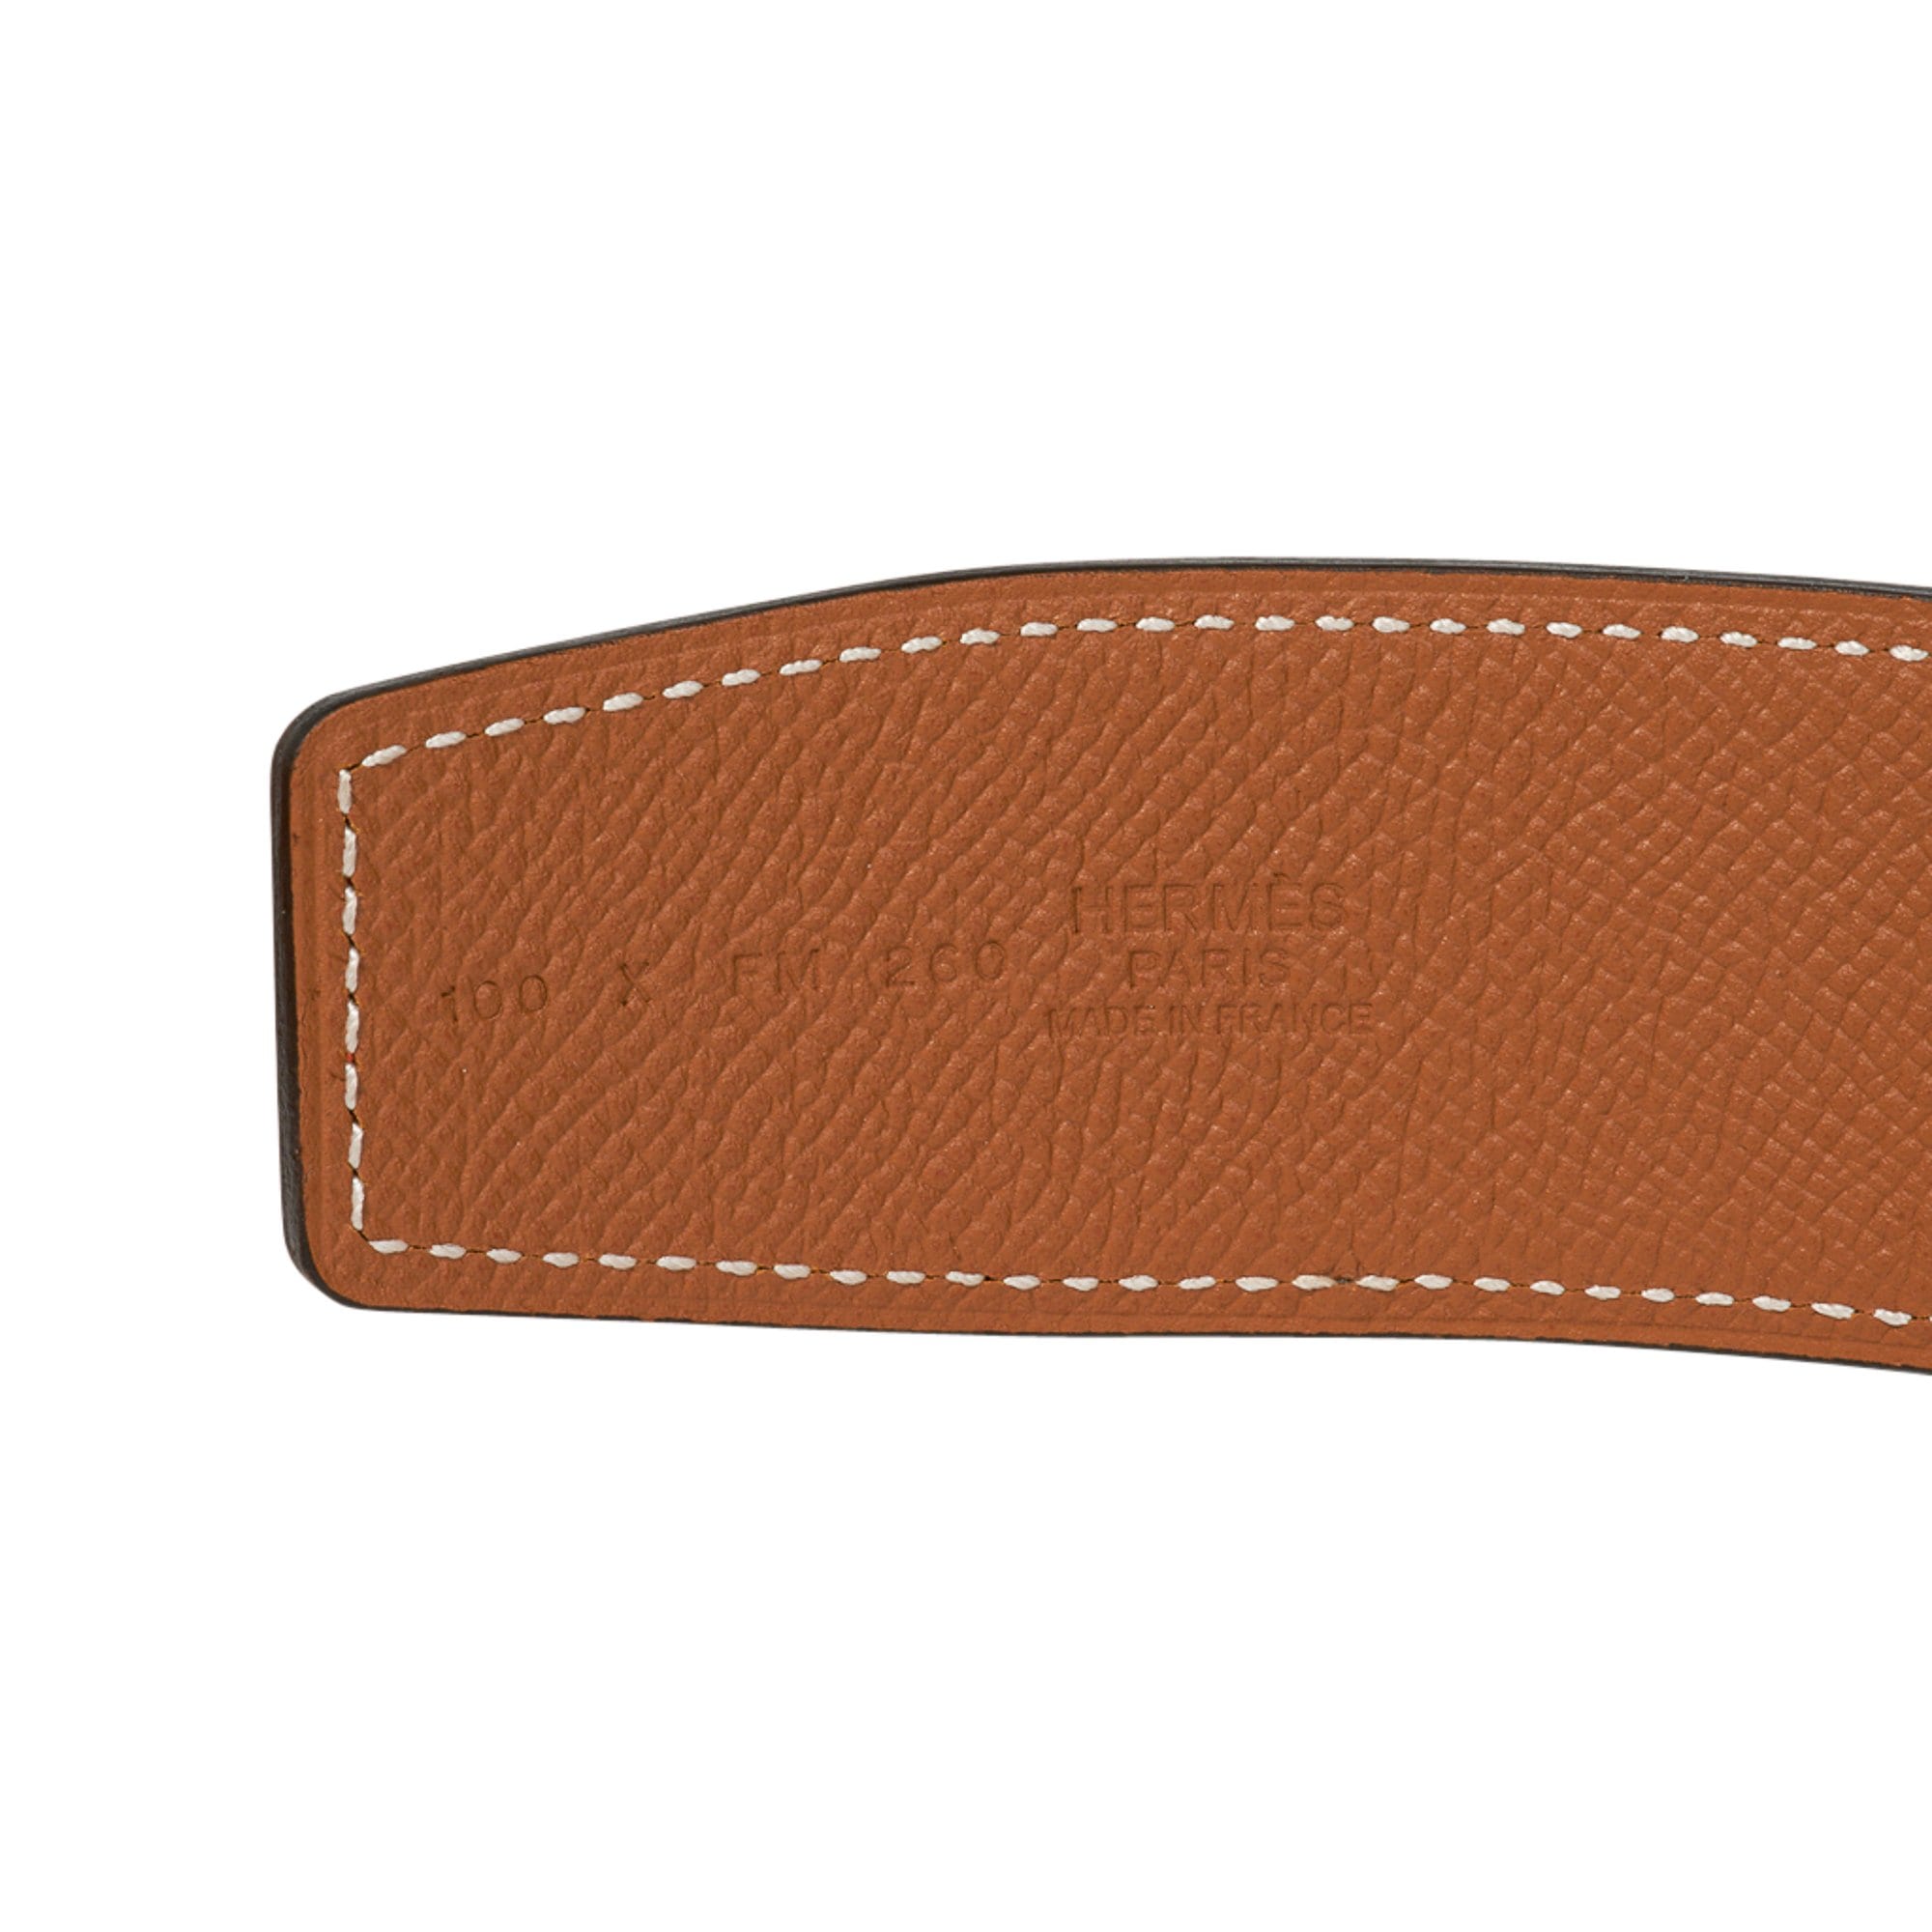 Leather belt Christian Louboutin Orange size 100 cm in Leather